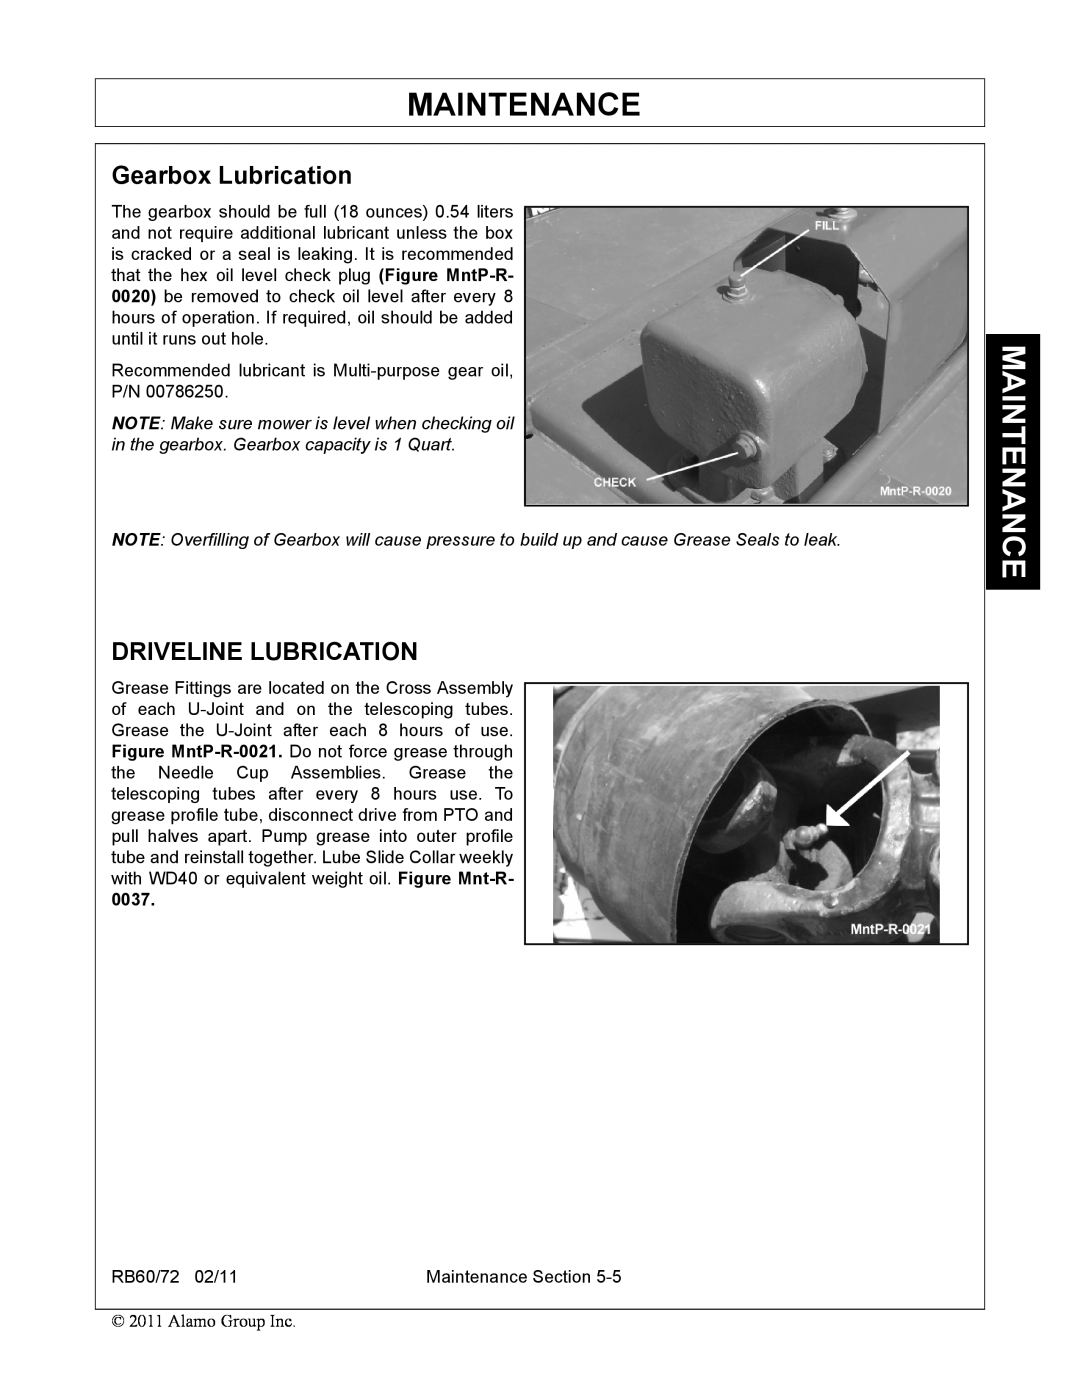 Blue Rhino RB60/72 manual Gearbox Lubrication, Driveline Lubrication, Maintenance 